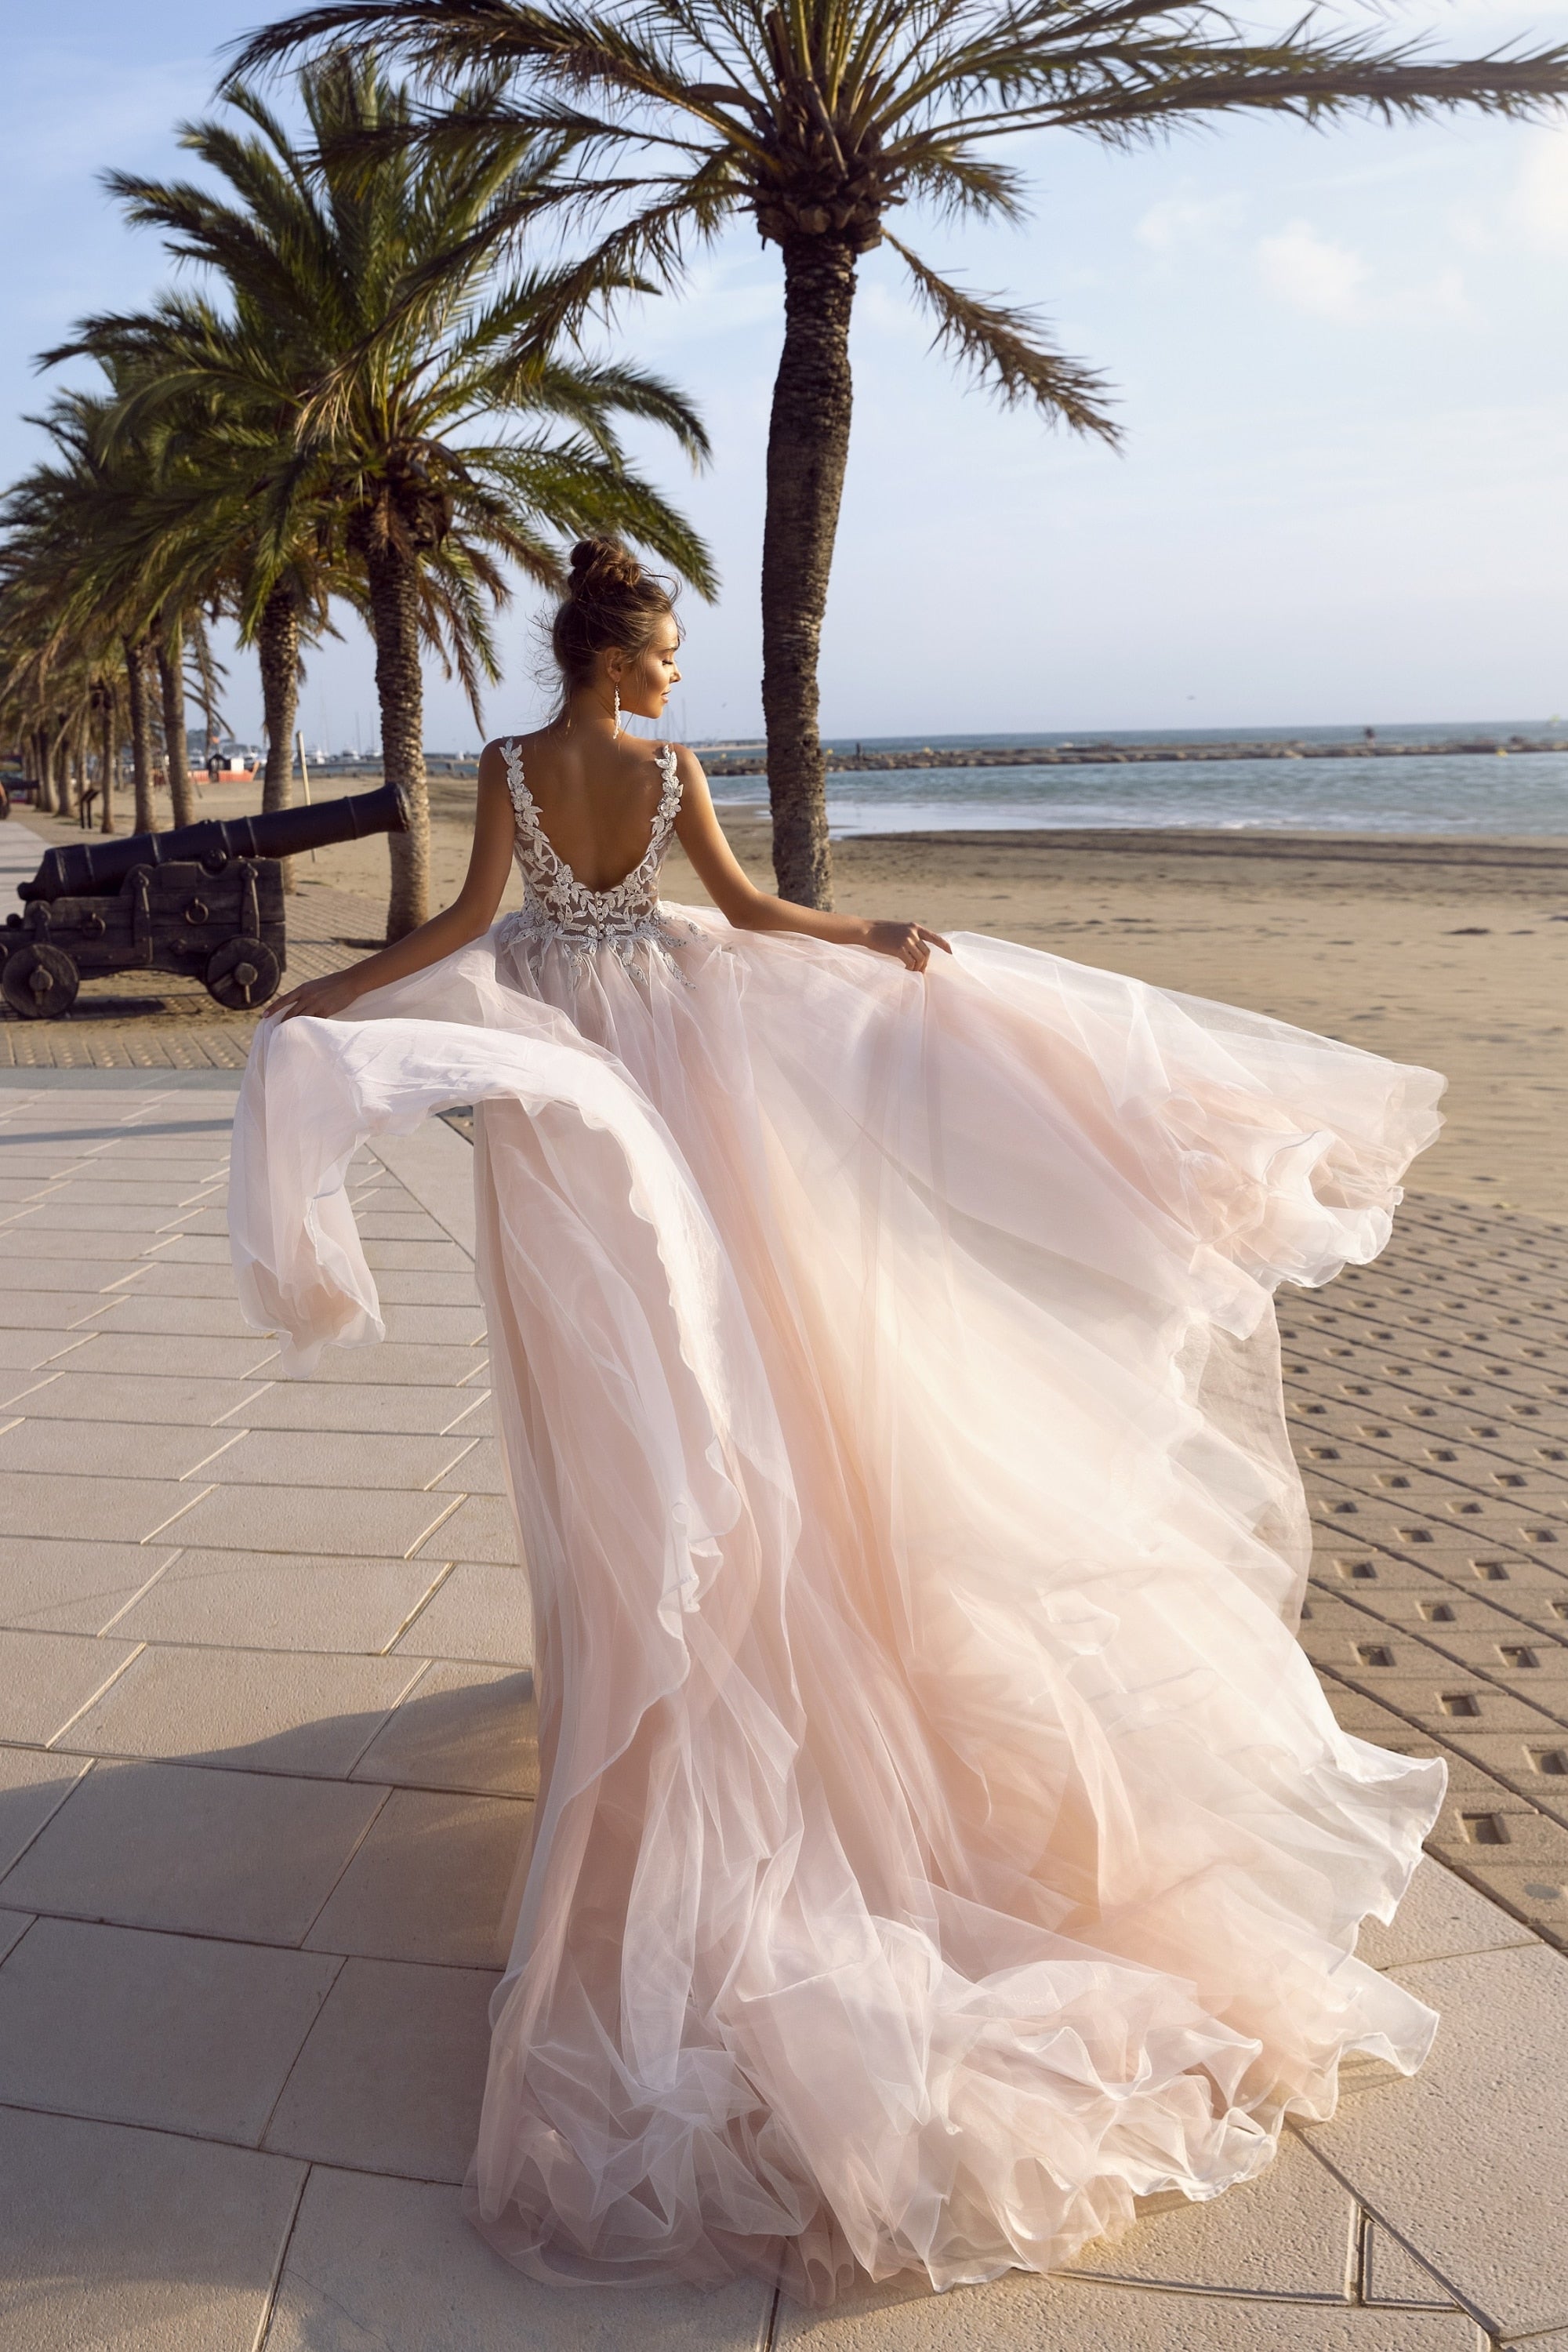 Verngo Country Beach Wedding Dress 2020 Blush Pink Tulle A Line Princess Wedding Gowns Backless Gilrs Formal Vestidos de 15